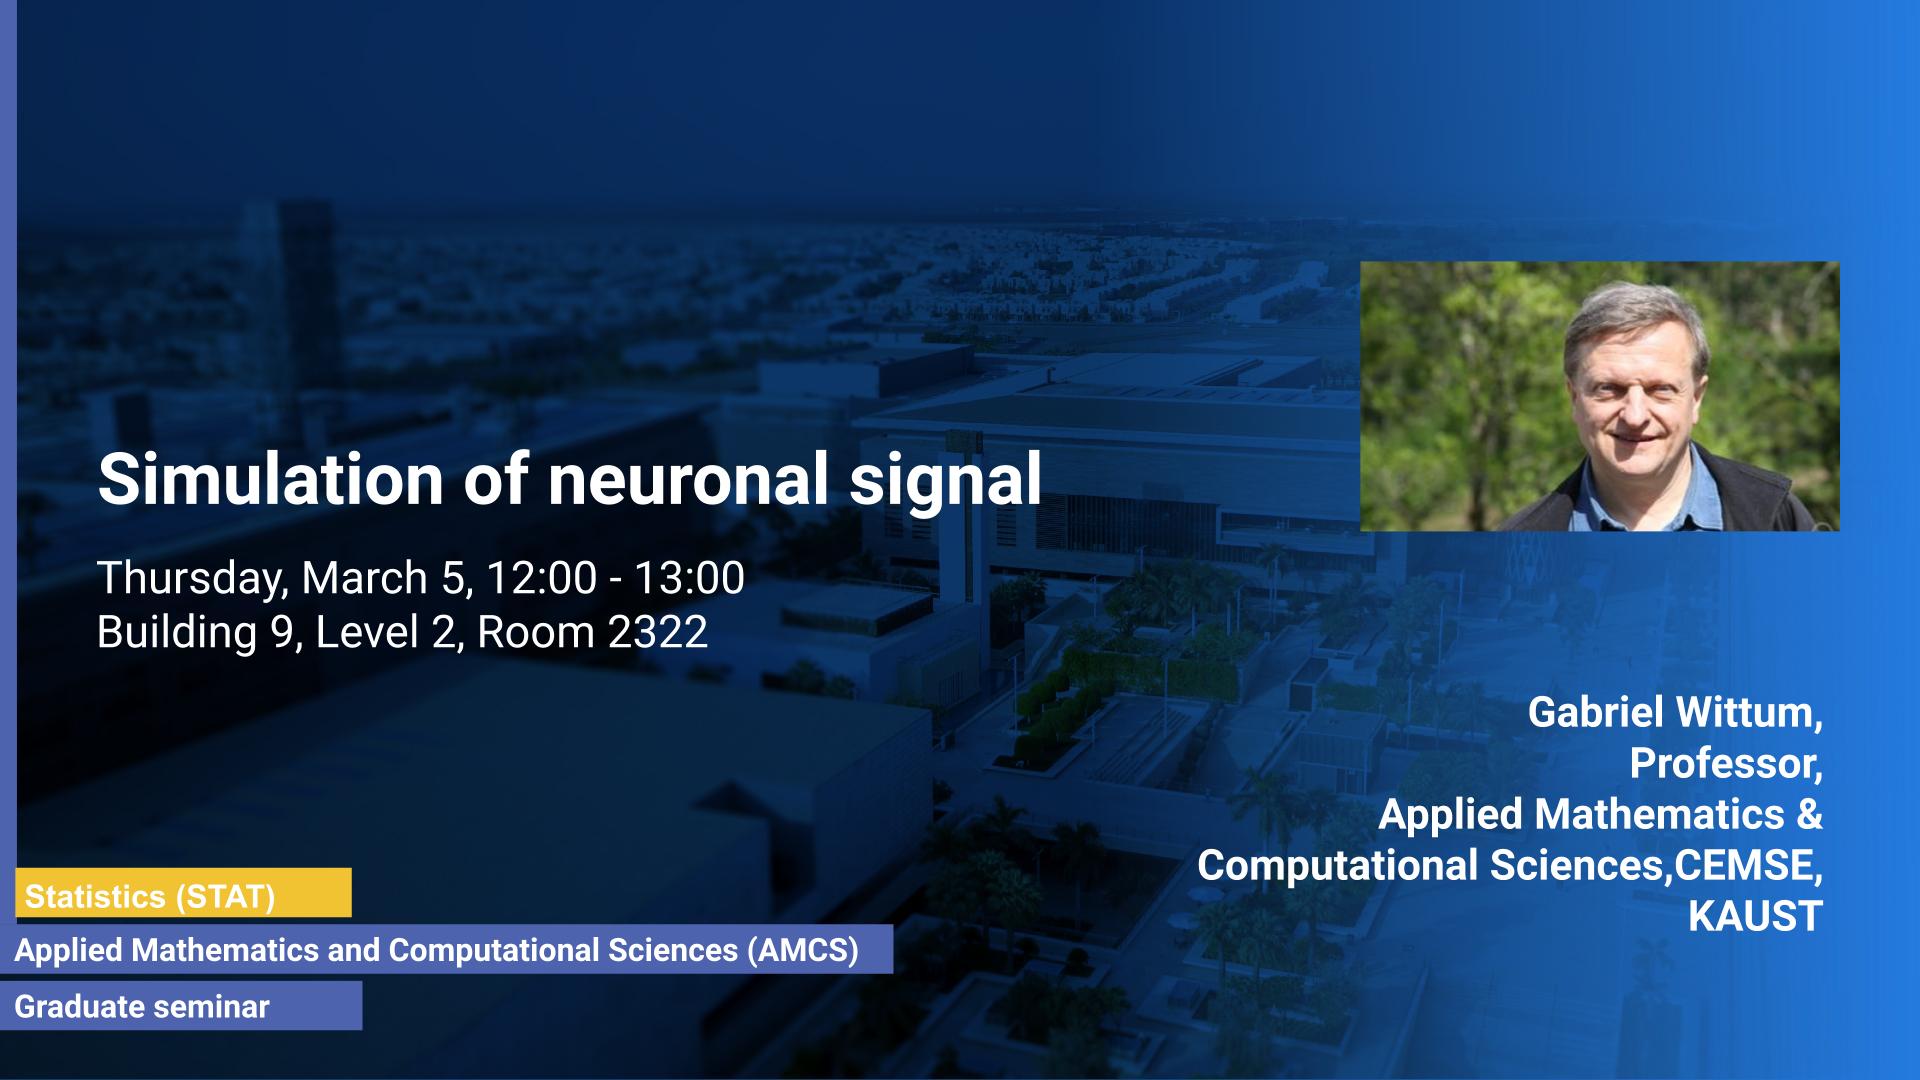 KAUST-CEMSE-AMCS-STAT-Graduate-Seminar-Gabriel Wittum-Simulation of Neuronal Signal